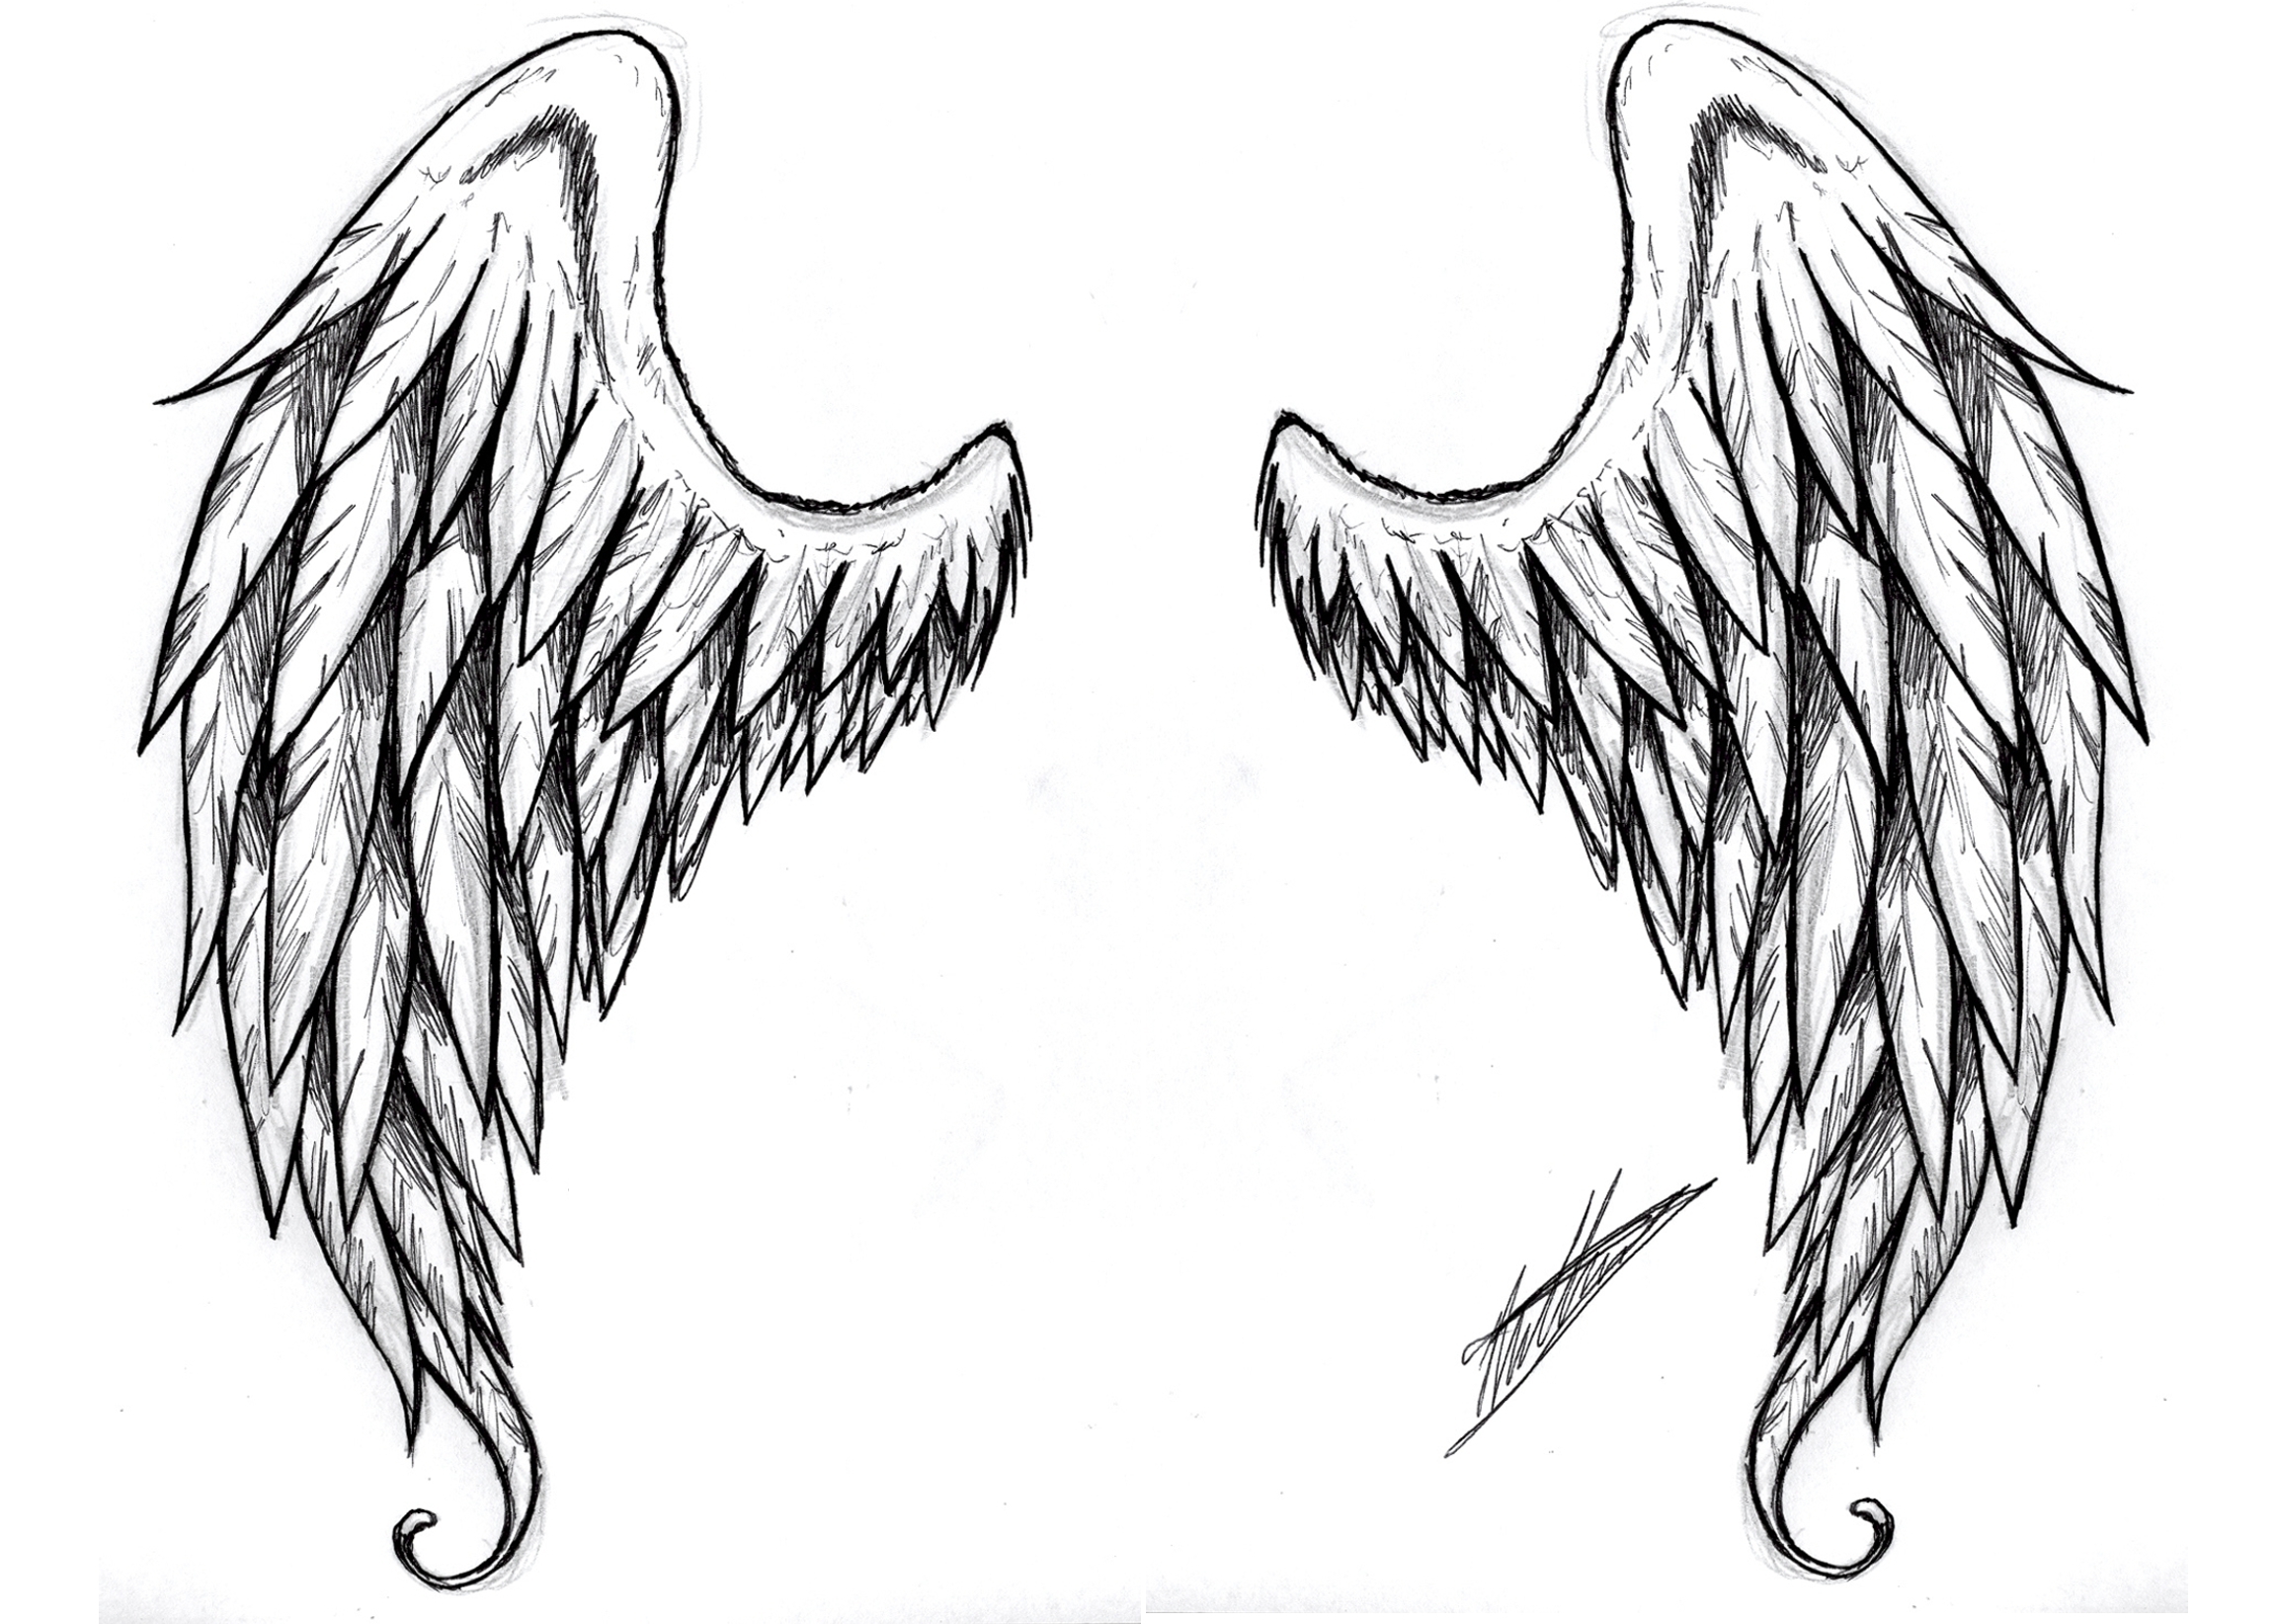 Demon With Wings Drawings In Pencil - Gallery